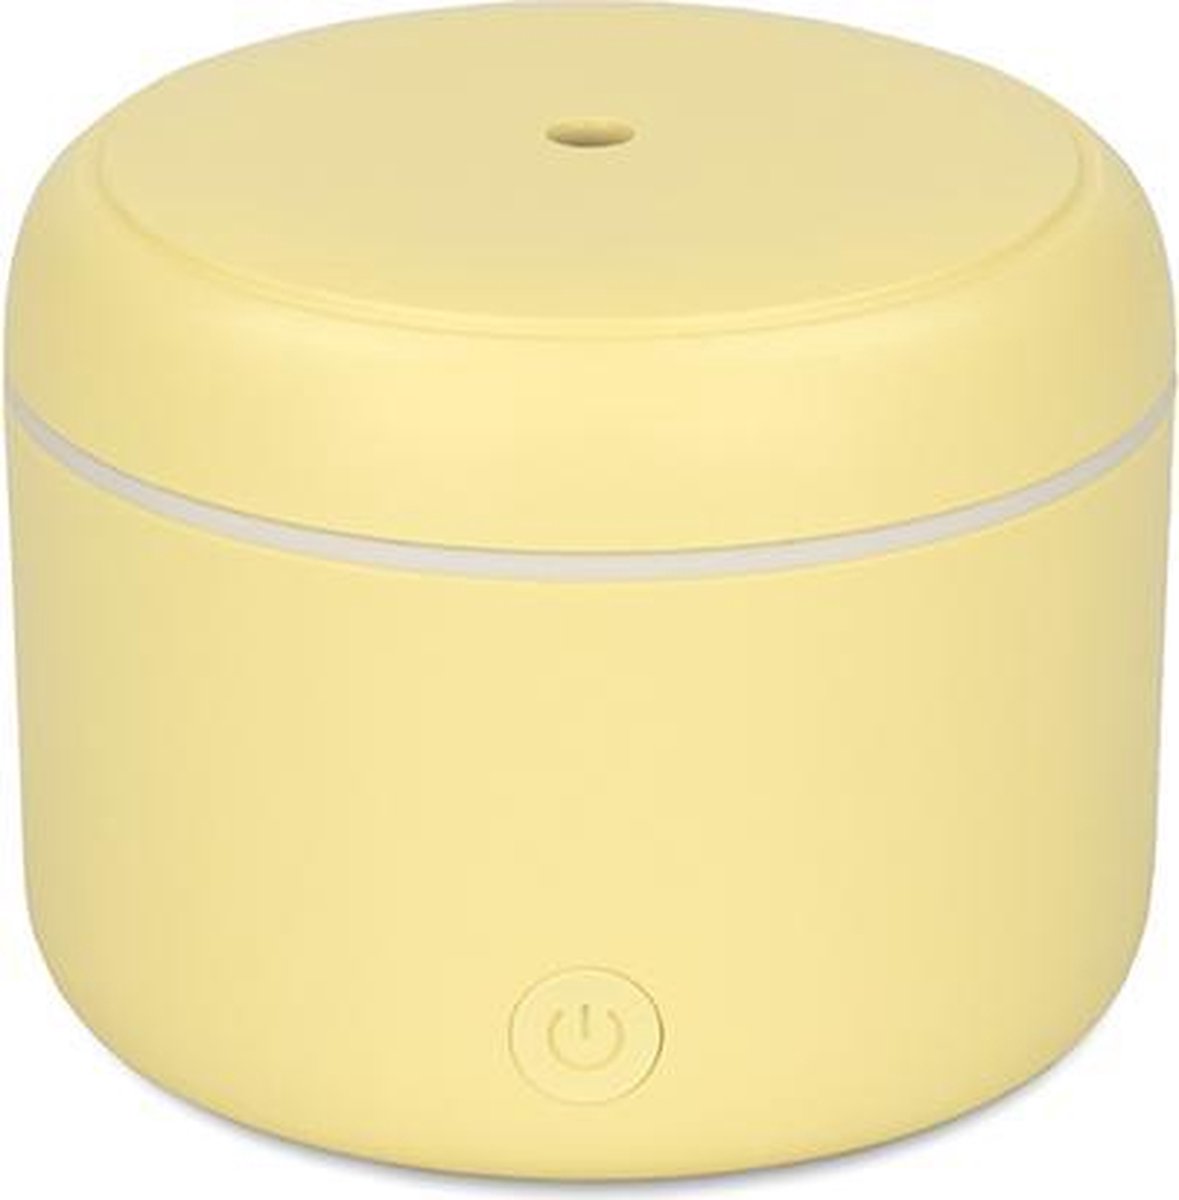 Turbionaire Puck Lemon Aroma diffuser - Luchtbevochtiger - verdamper - led verlichtigng met meerdere kleuren voor extra sfeer -Ultrasone geurverspreider - Europees febrikaat